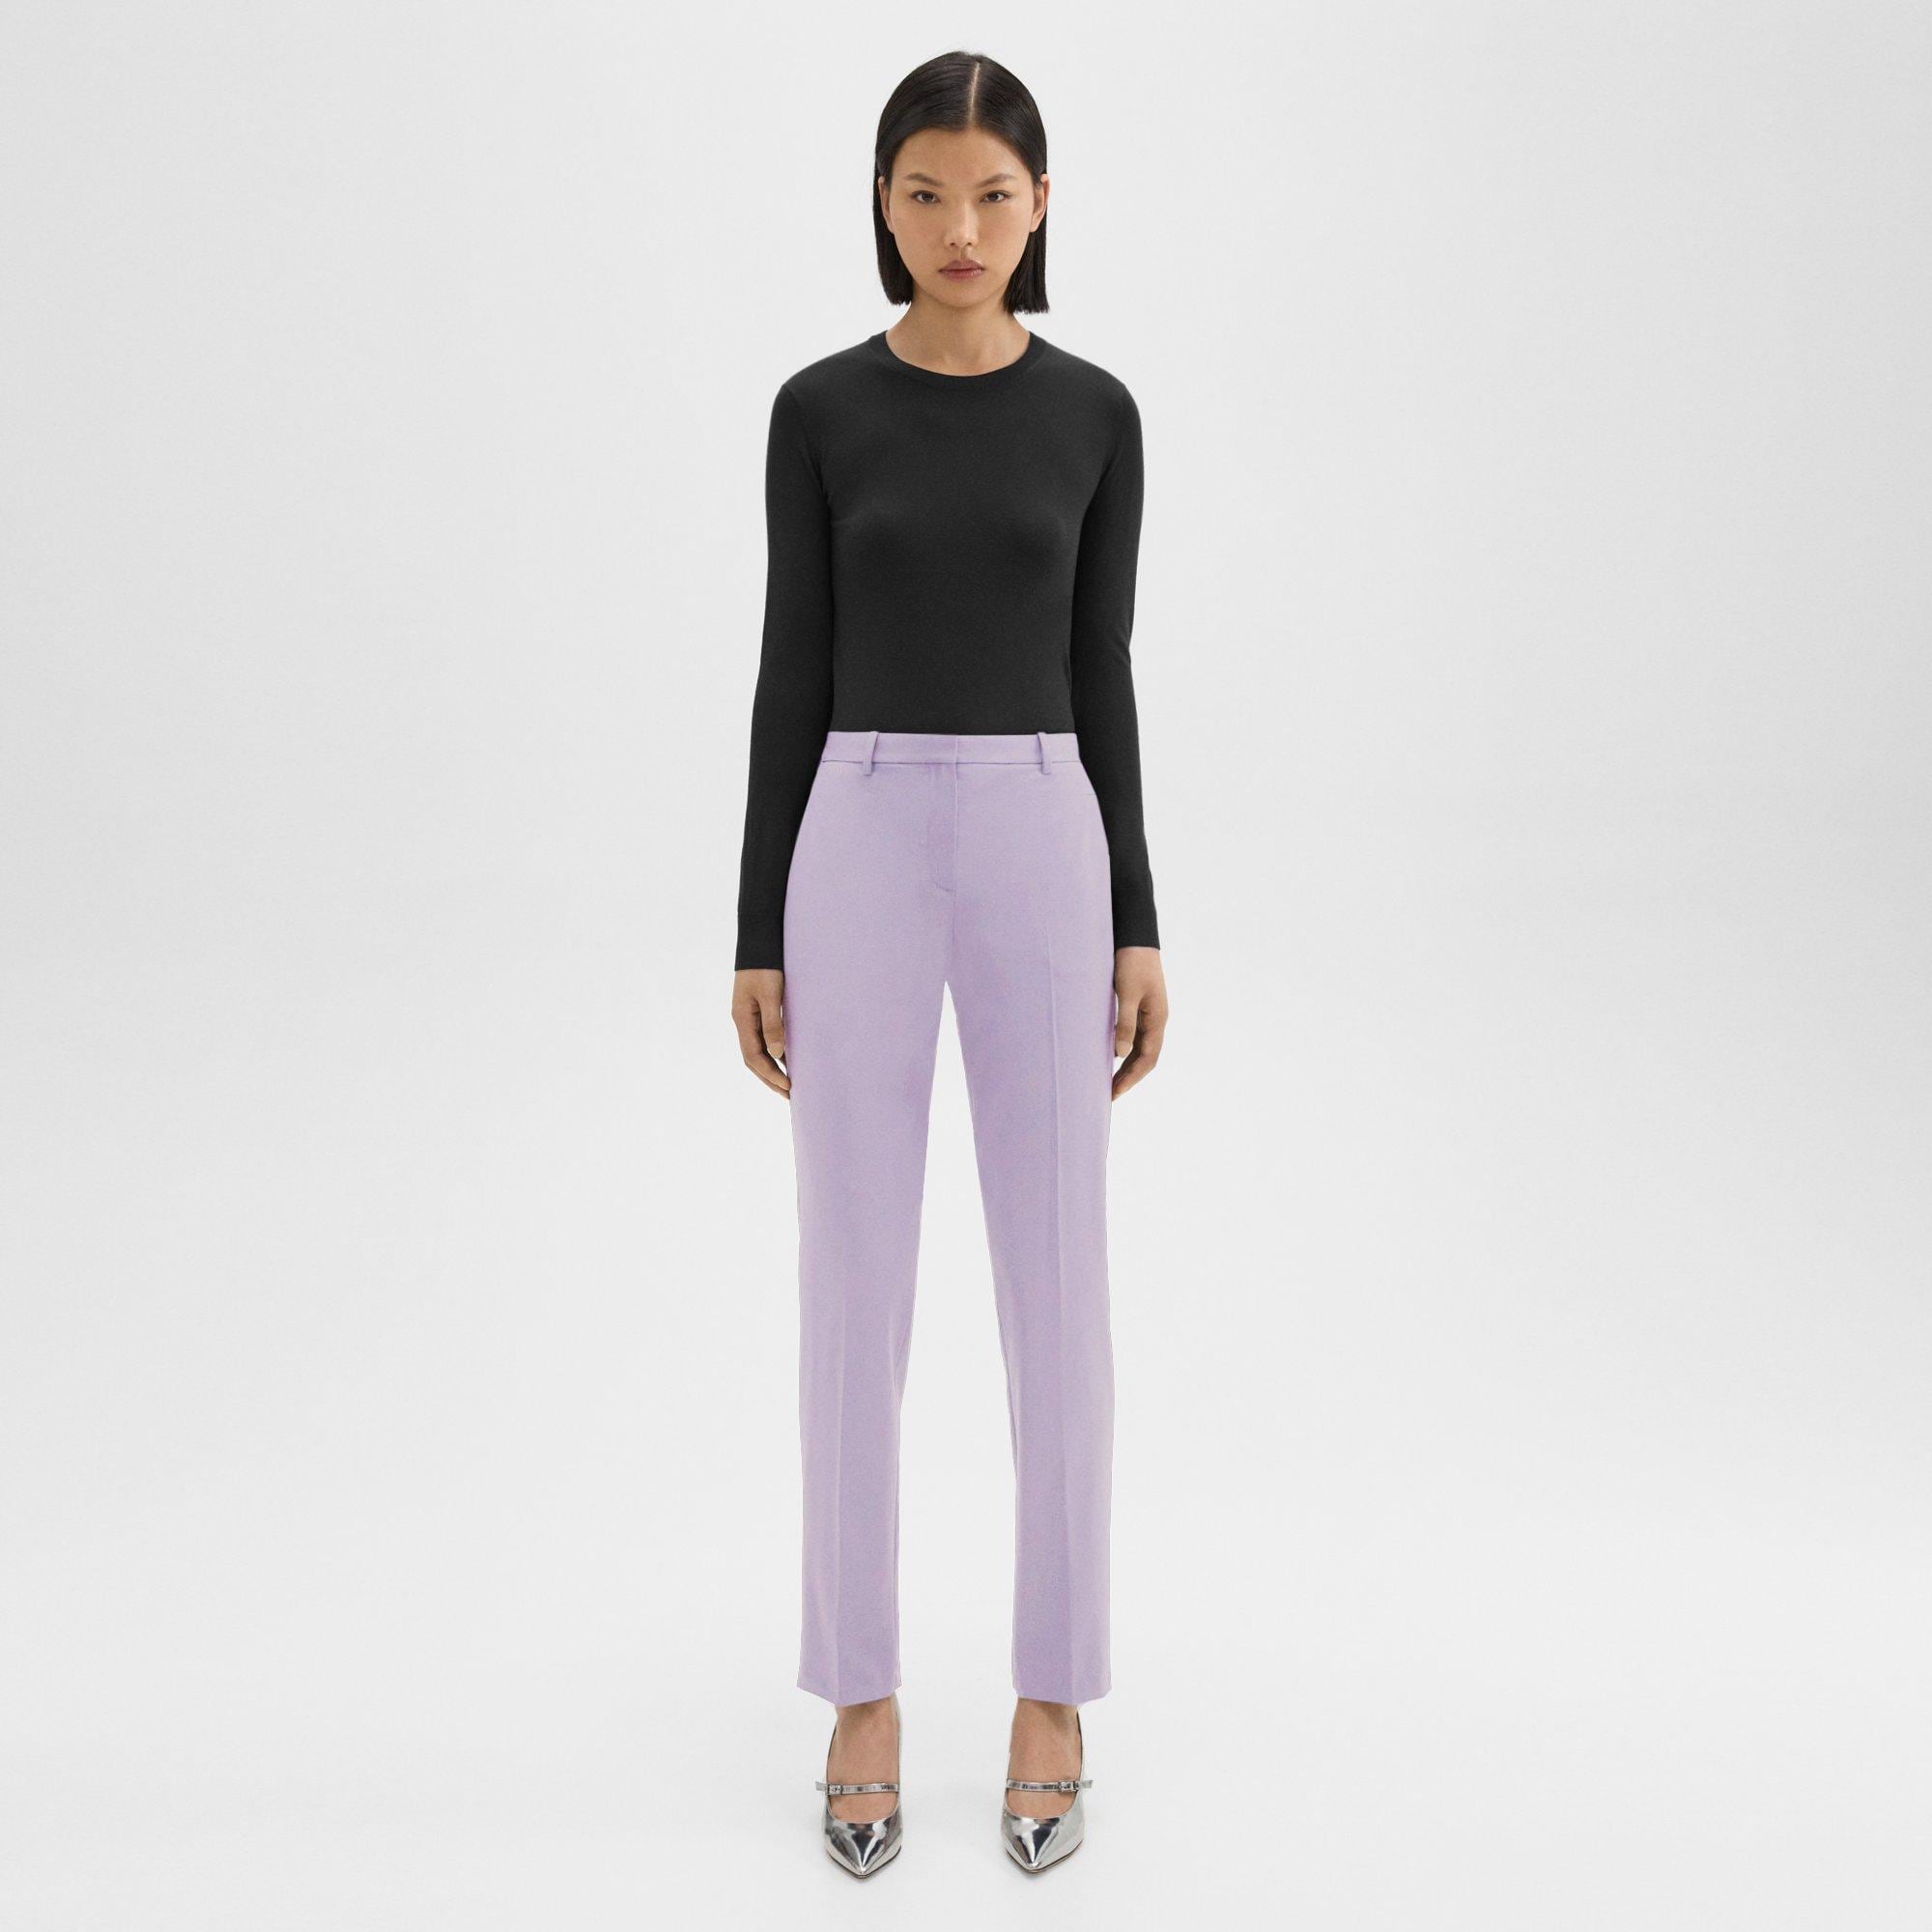 NWT. Zara Purple Satin Full Length High-Waisted Trousers/Pants